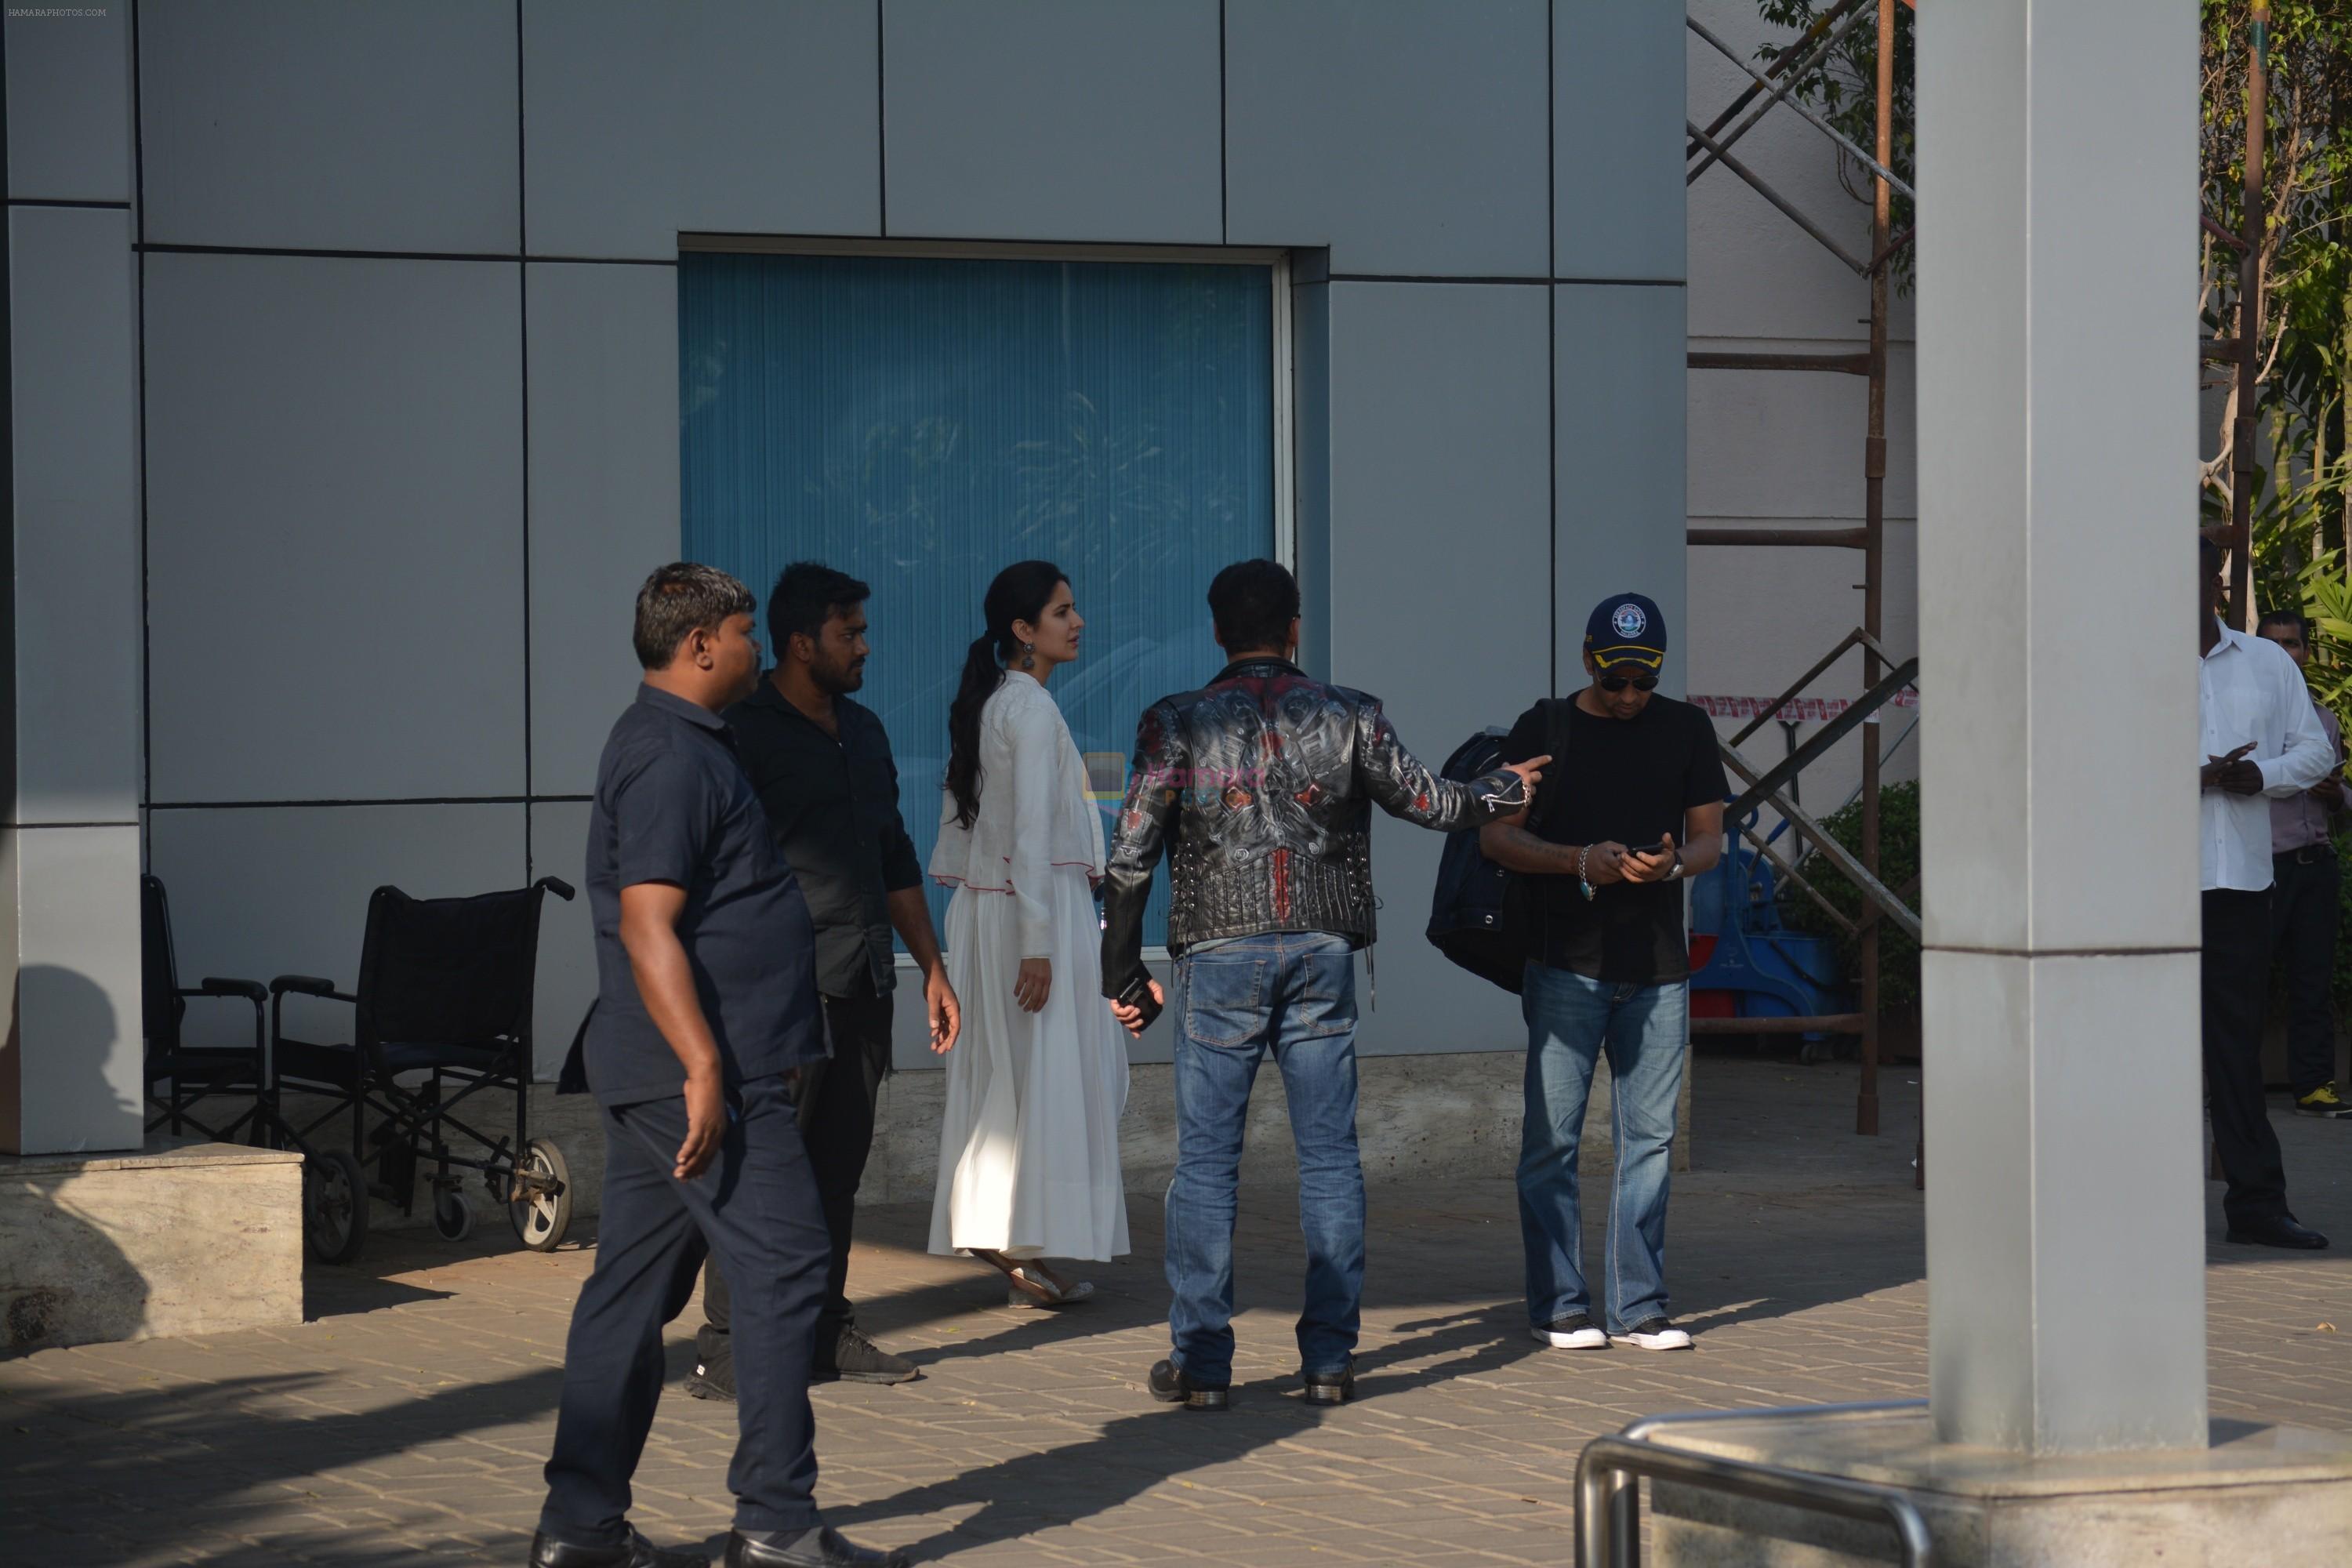 Salman Khan, Katrina Kaif Spotted At Airport on 9th Dec 2018